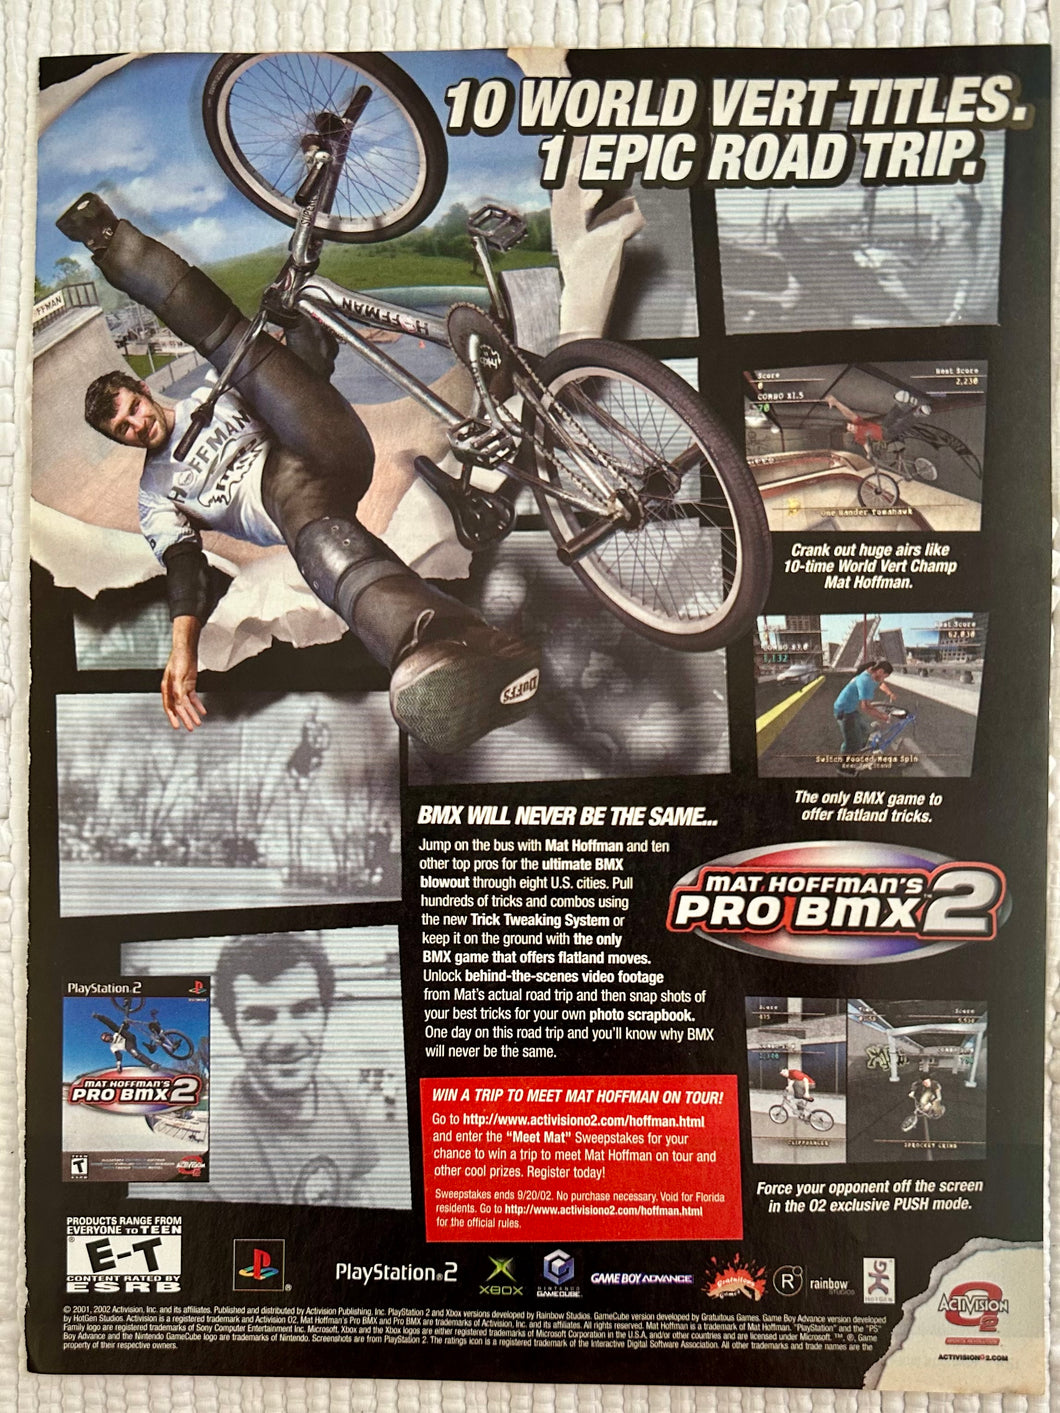 Mat Hoffman’s Pro BMX 2 - PS2 Xbox NGC GBA - Original Vintage Advertisement - Print Ads - Laminated A4 Poster